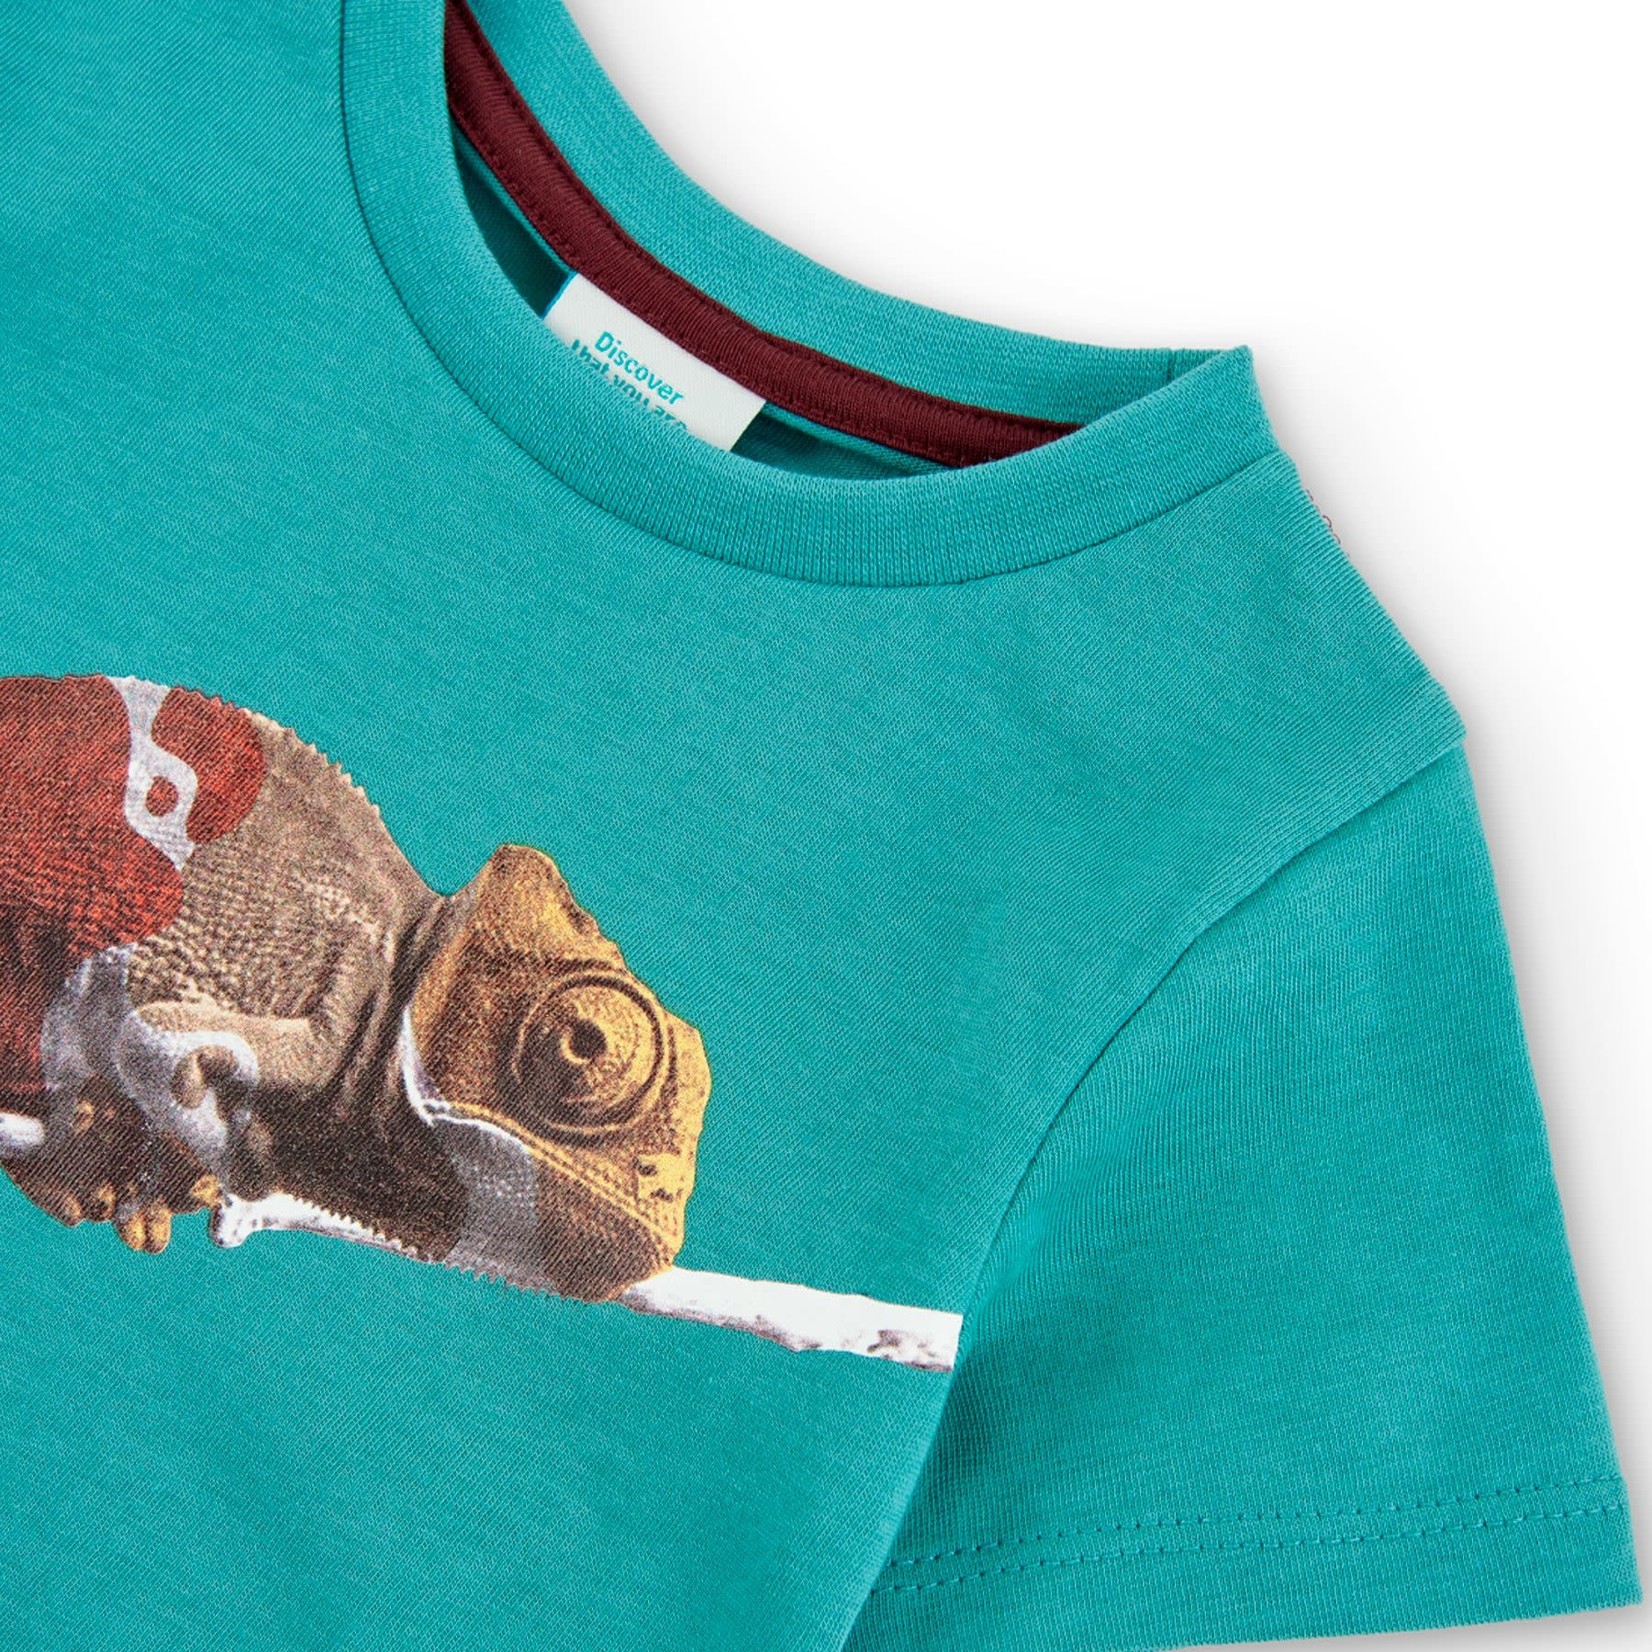 Boboli BOBOLI - Teal t-shirt with chameleon print